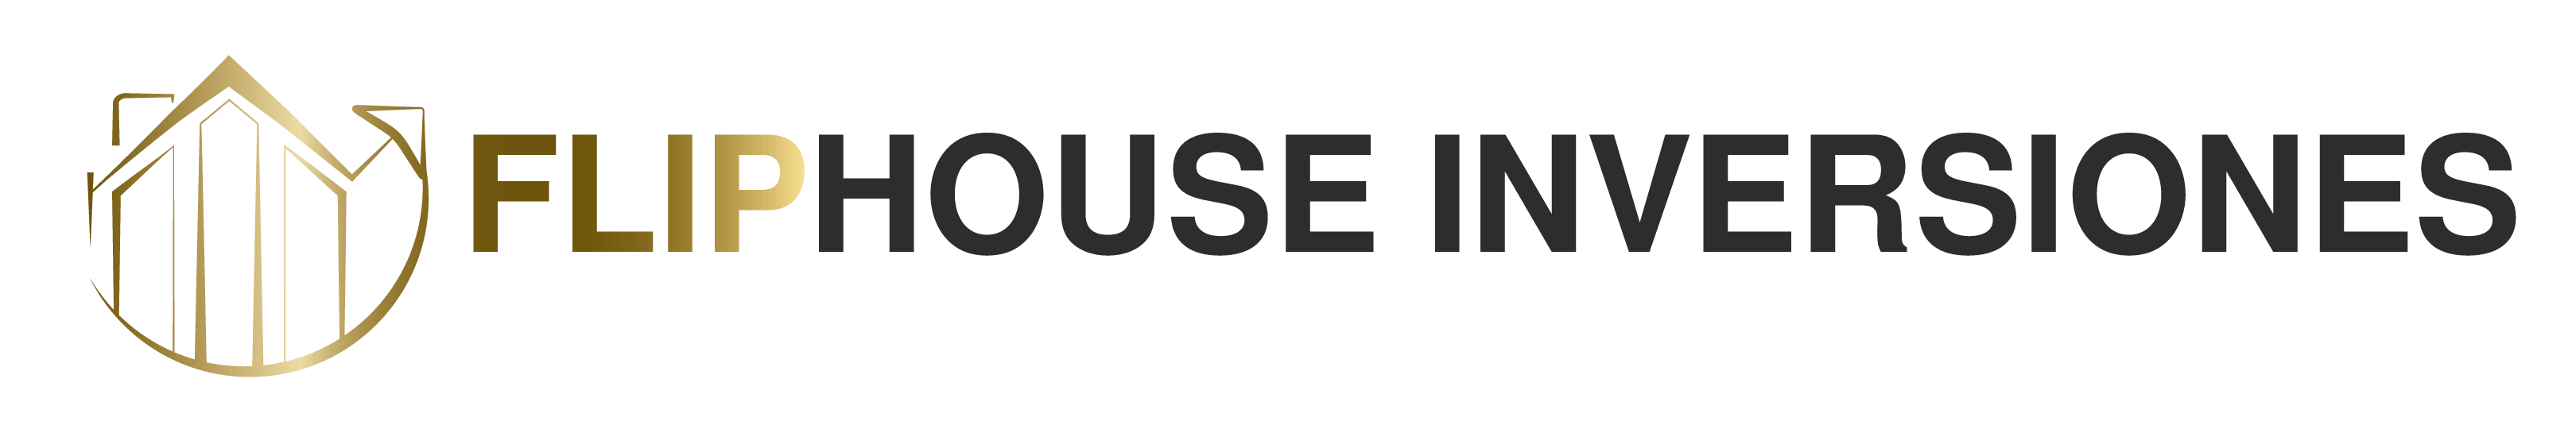 Logo Fliphouse inversiones princ